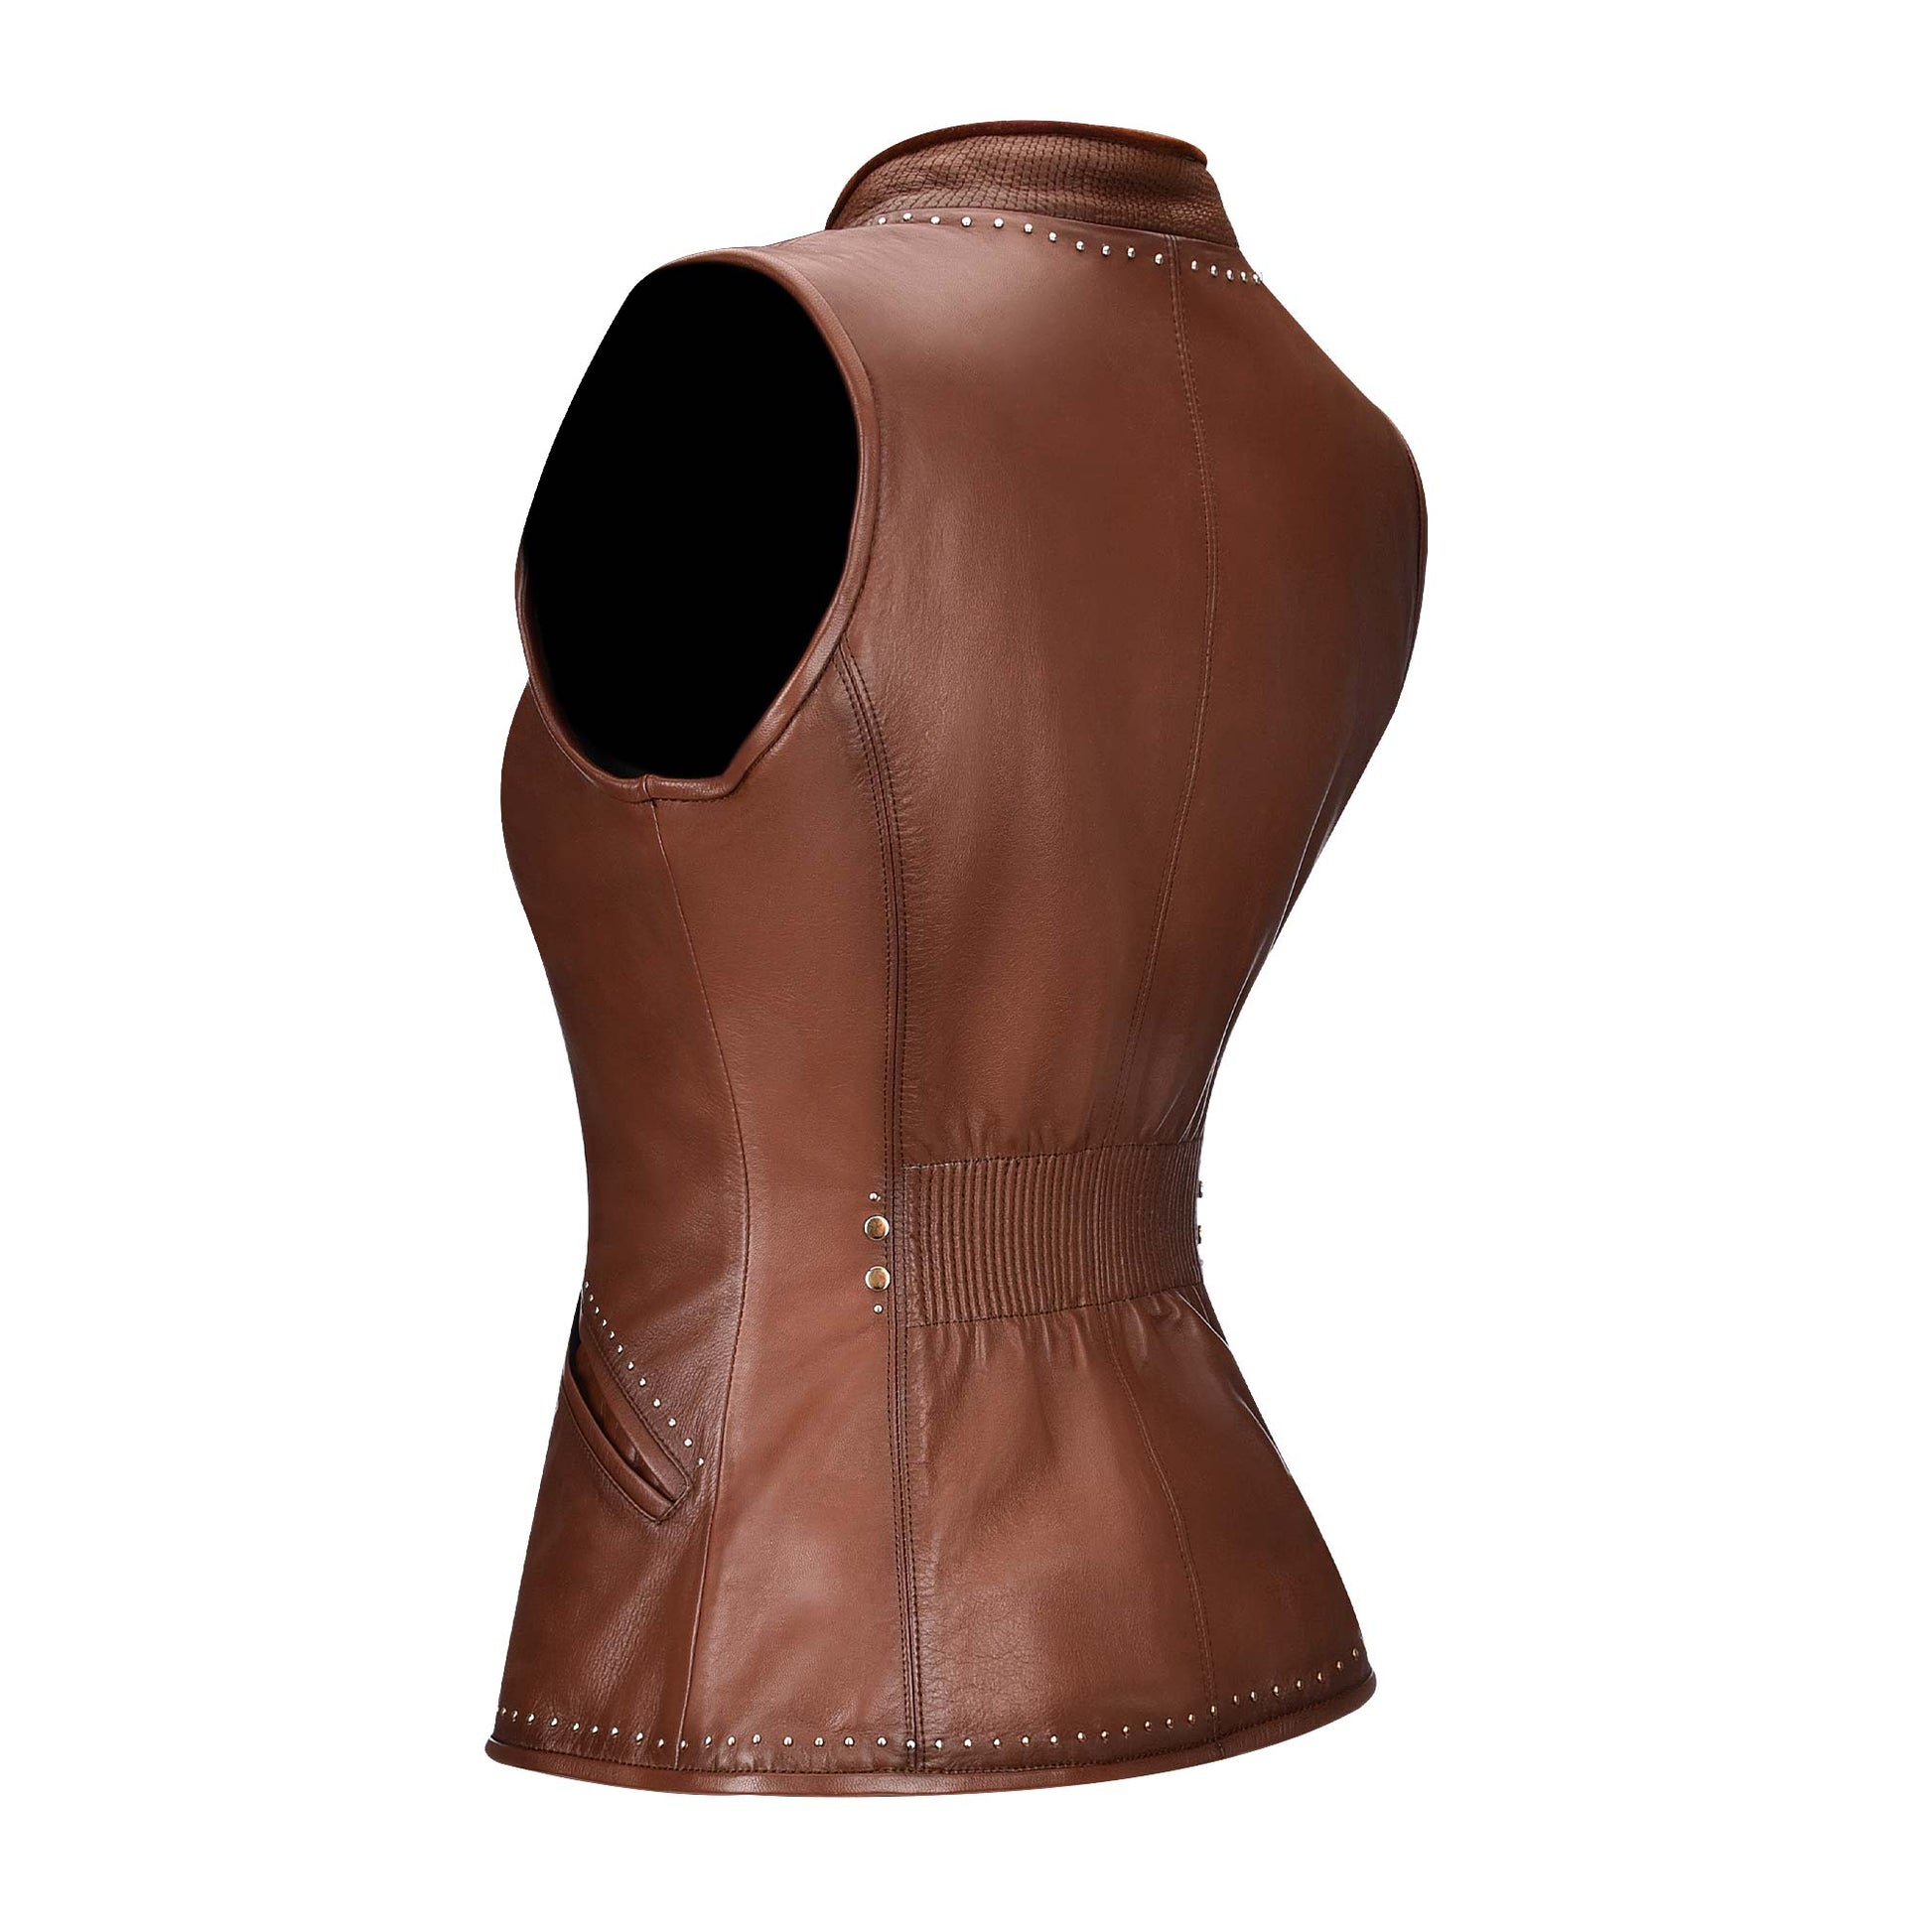 Embroidered honey leather reversible vest, Reversible vest for women in ovine leather. side pockets, subtle metallic applications.